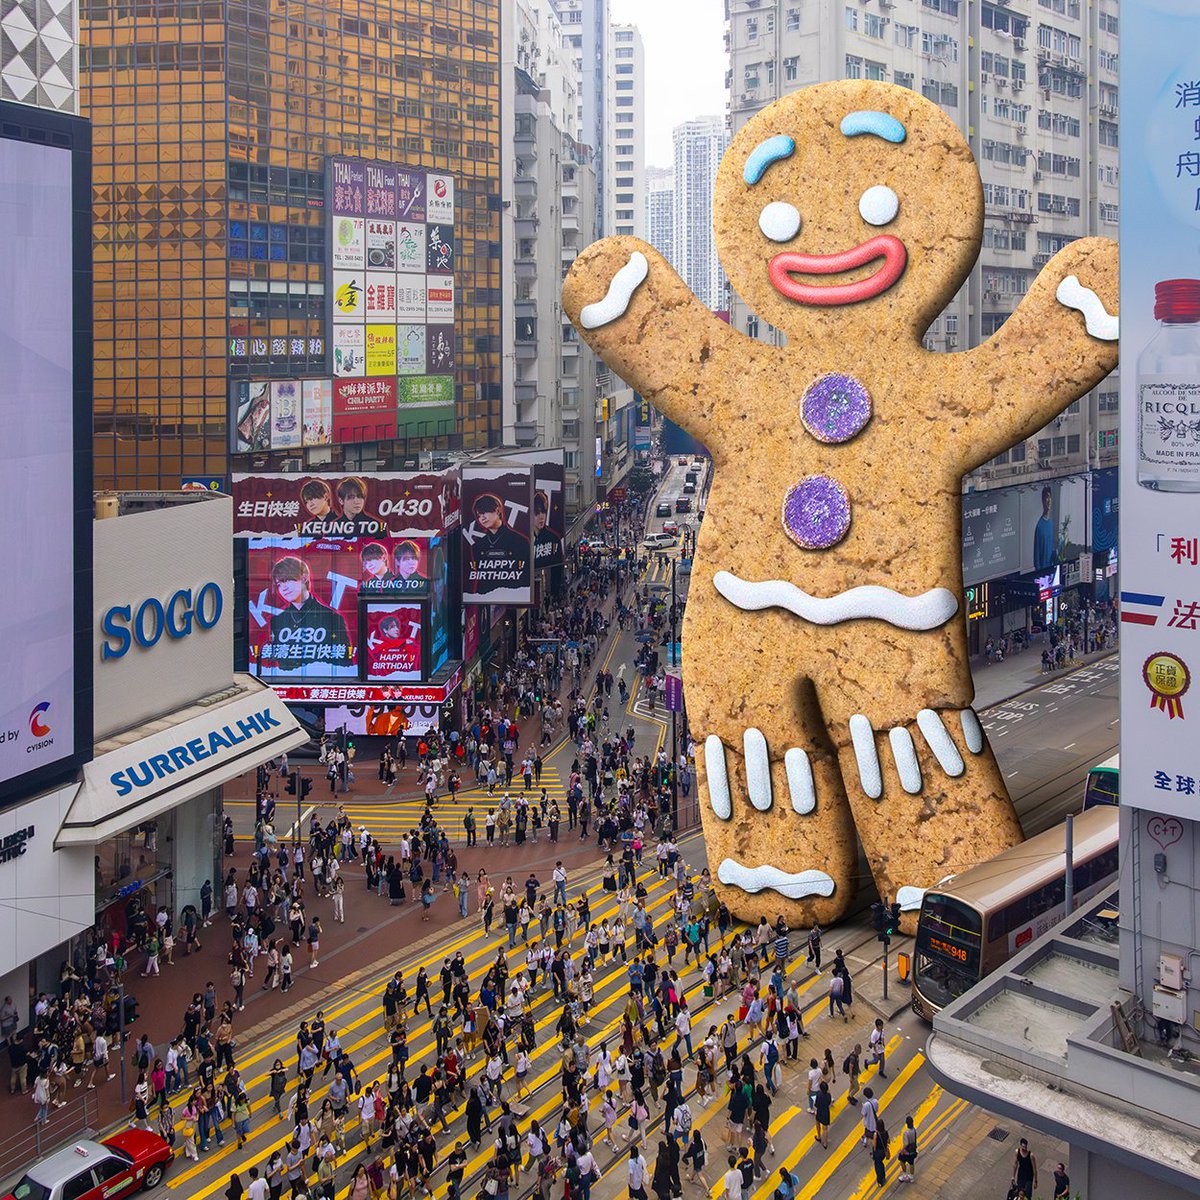 Gingerbread Man Bay
薑餅灣

#GingerbreadMan #薑餅人
#姜濤 #姜濤灣 #KeungTo
#p圖 
#Photoshop 
#MadeWithPhotoshop 
#PhotoManipulation 
#NotAI 
#HongKong 
#surrealhk